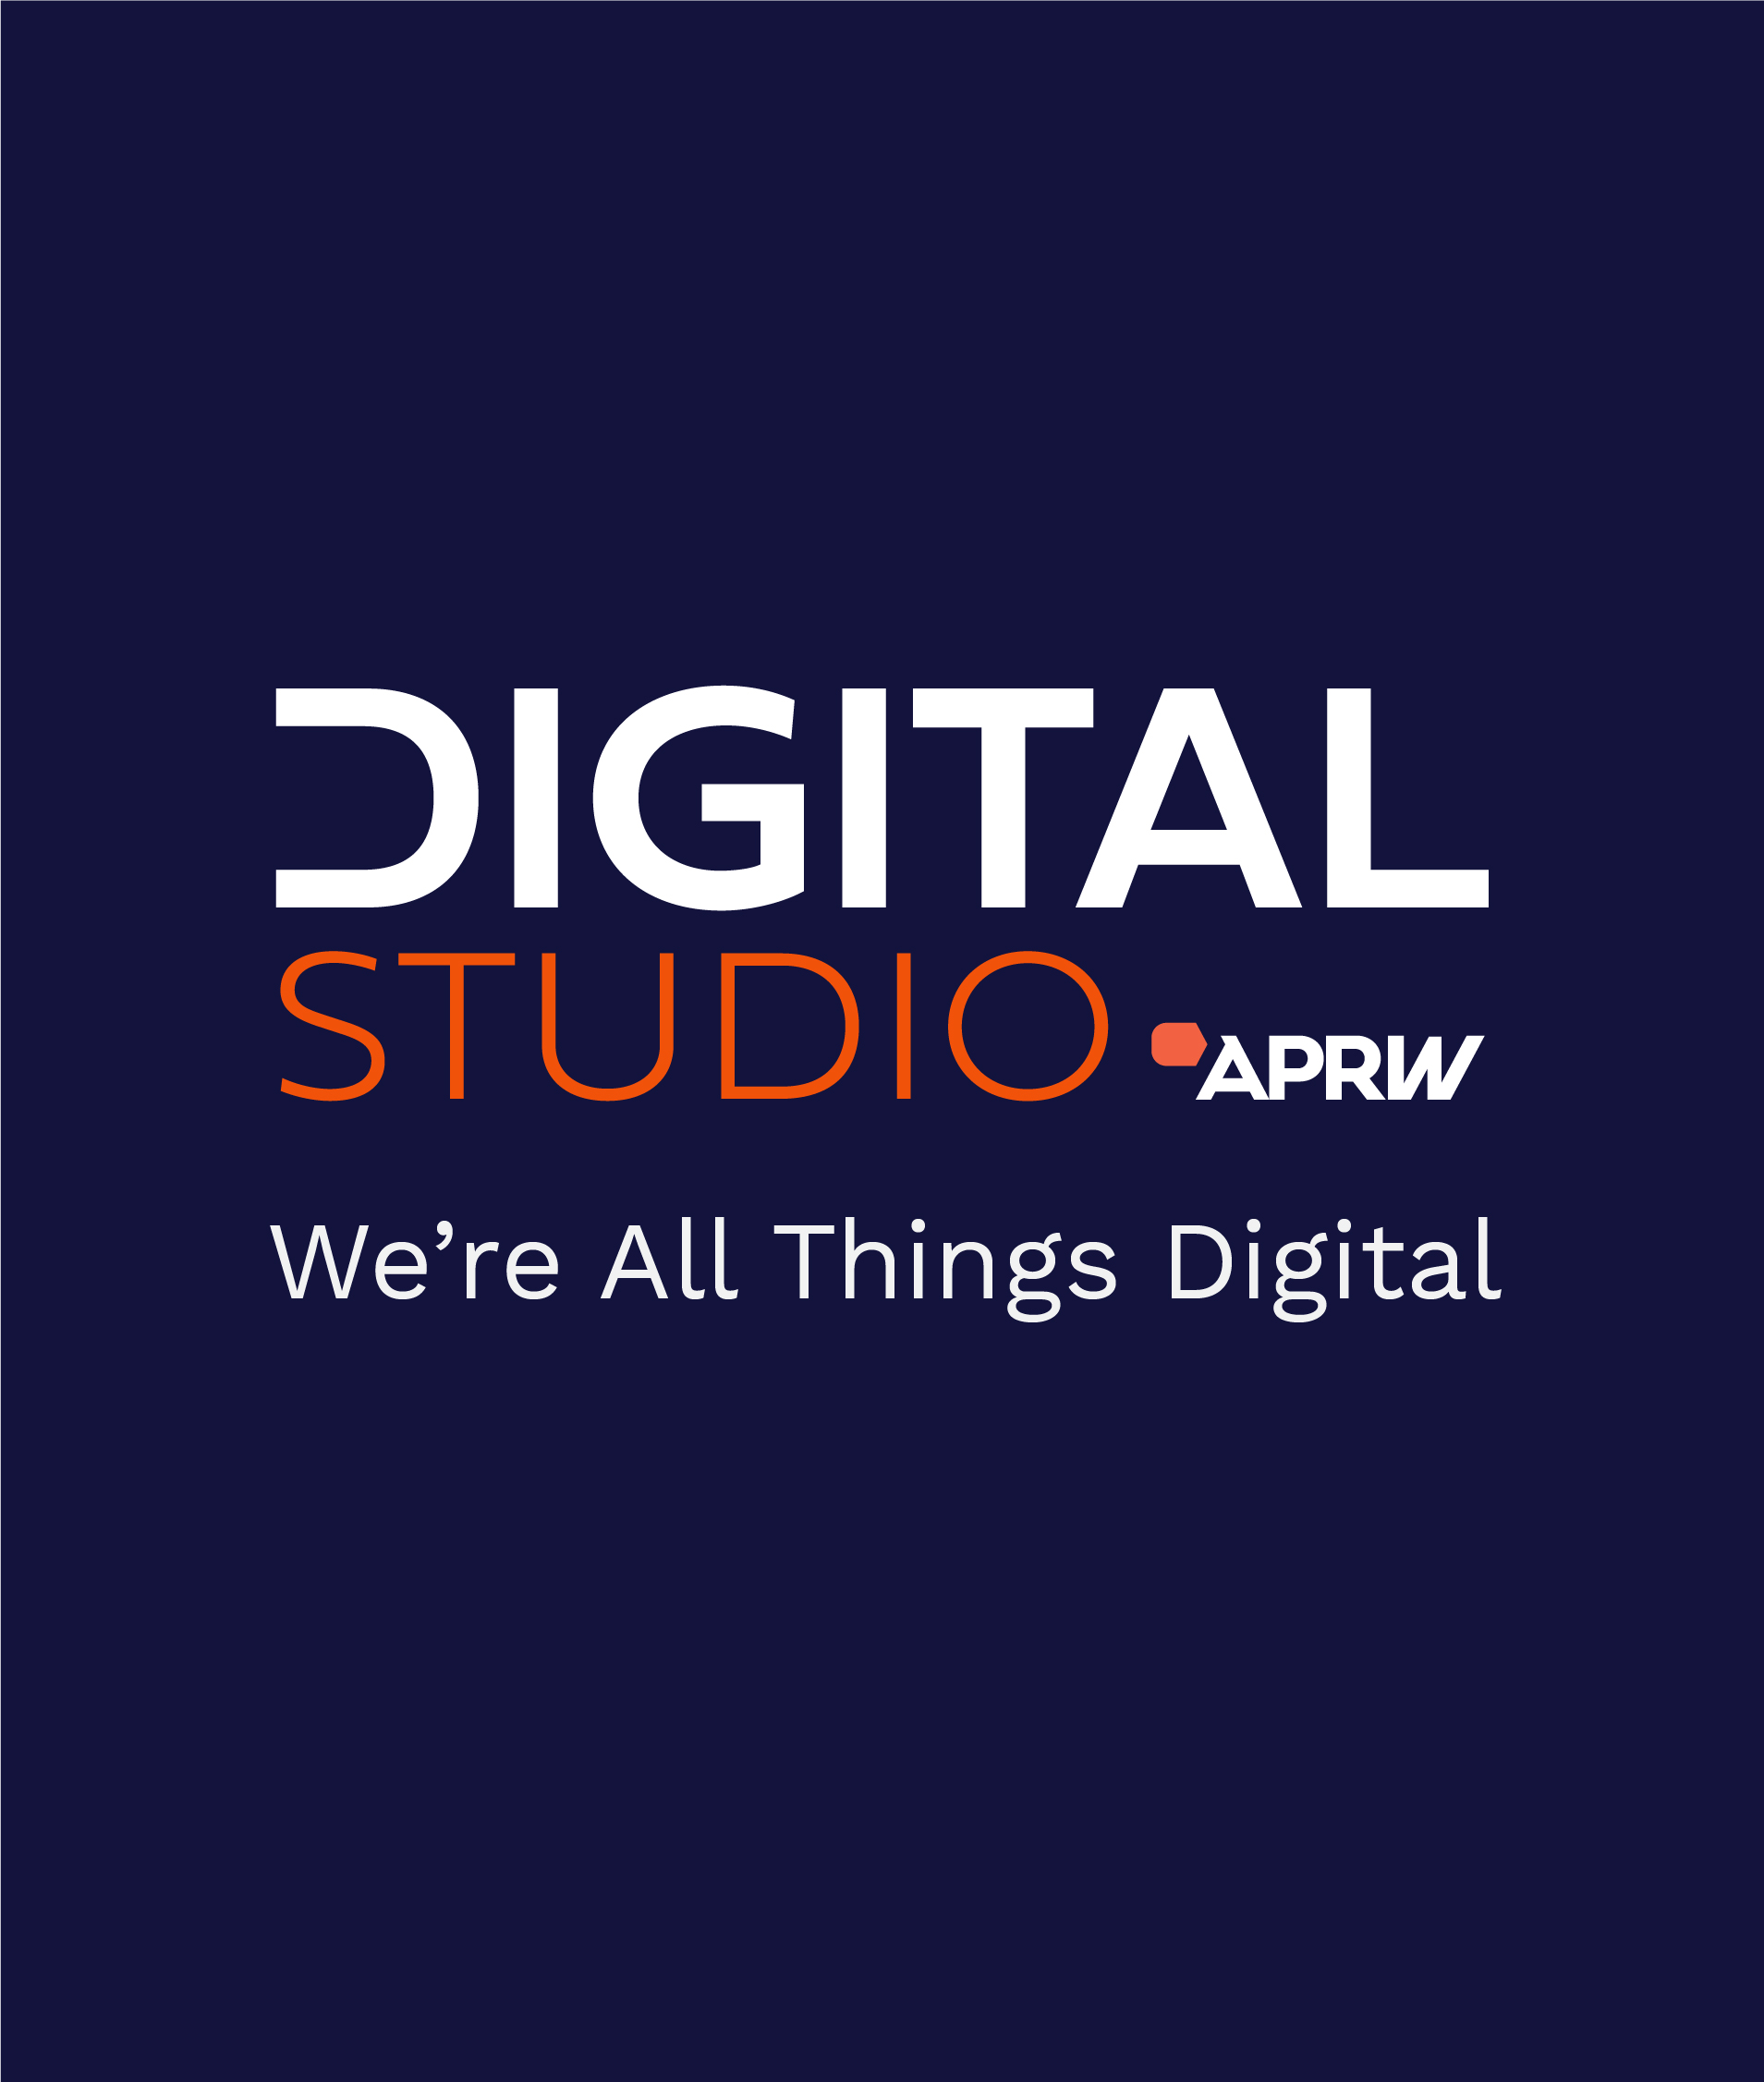 APRW_DigitalStudio_Mobile_Banner